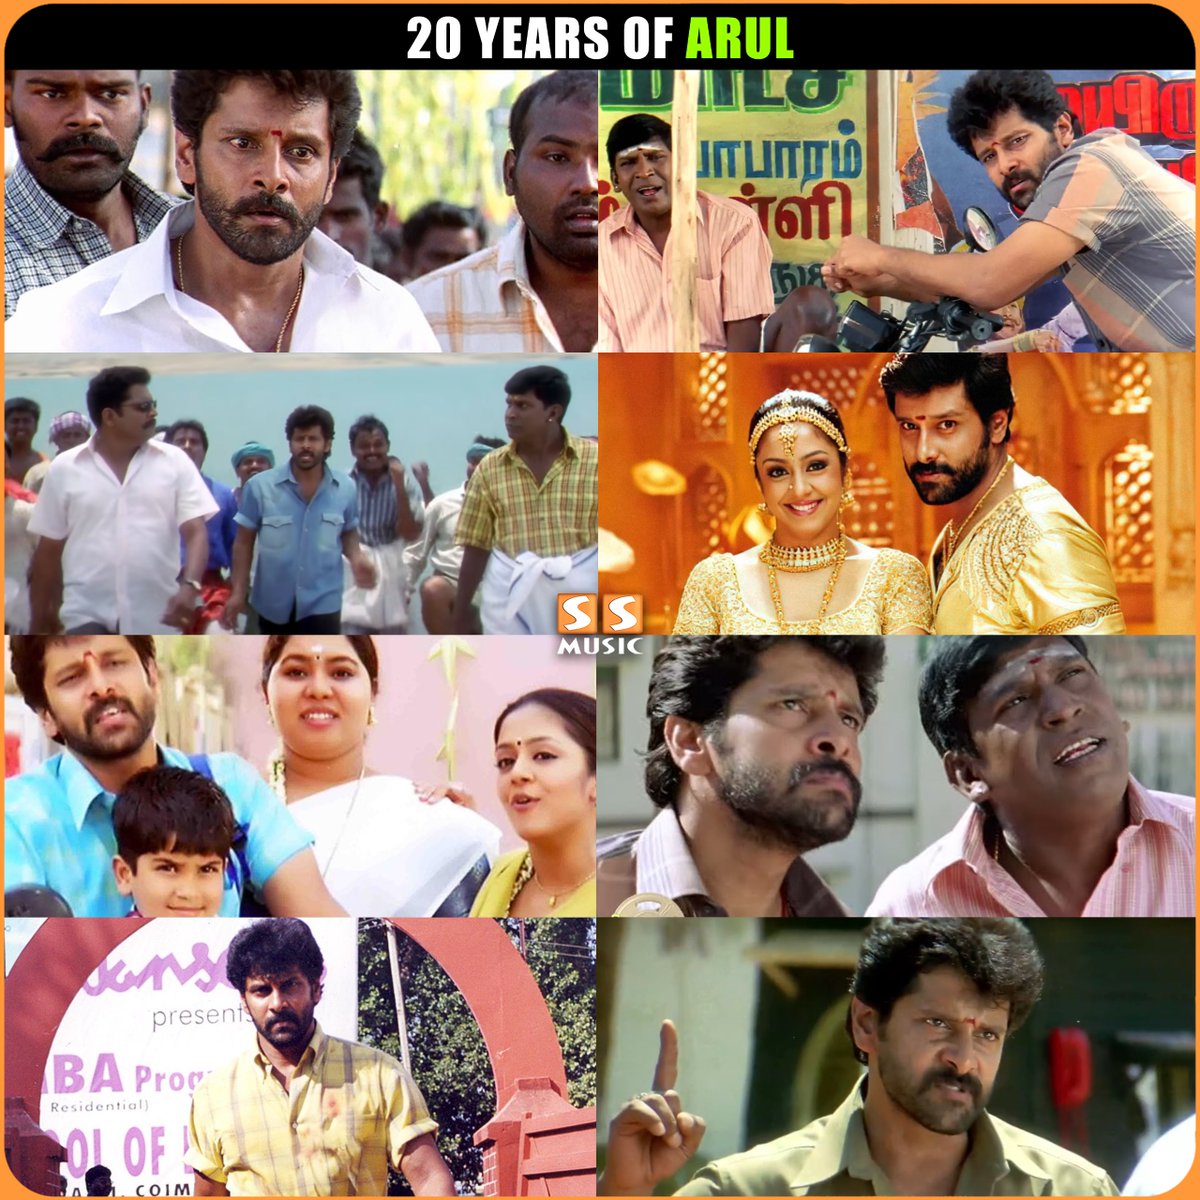 Celebrating 20 Years of Blockbuster #Arul 🤩

@chiyaan #jyotika #Harrisjayaraj #Hari #20YearsofArul #Arul #ArulMovie #SSMusic